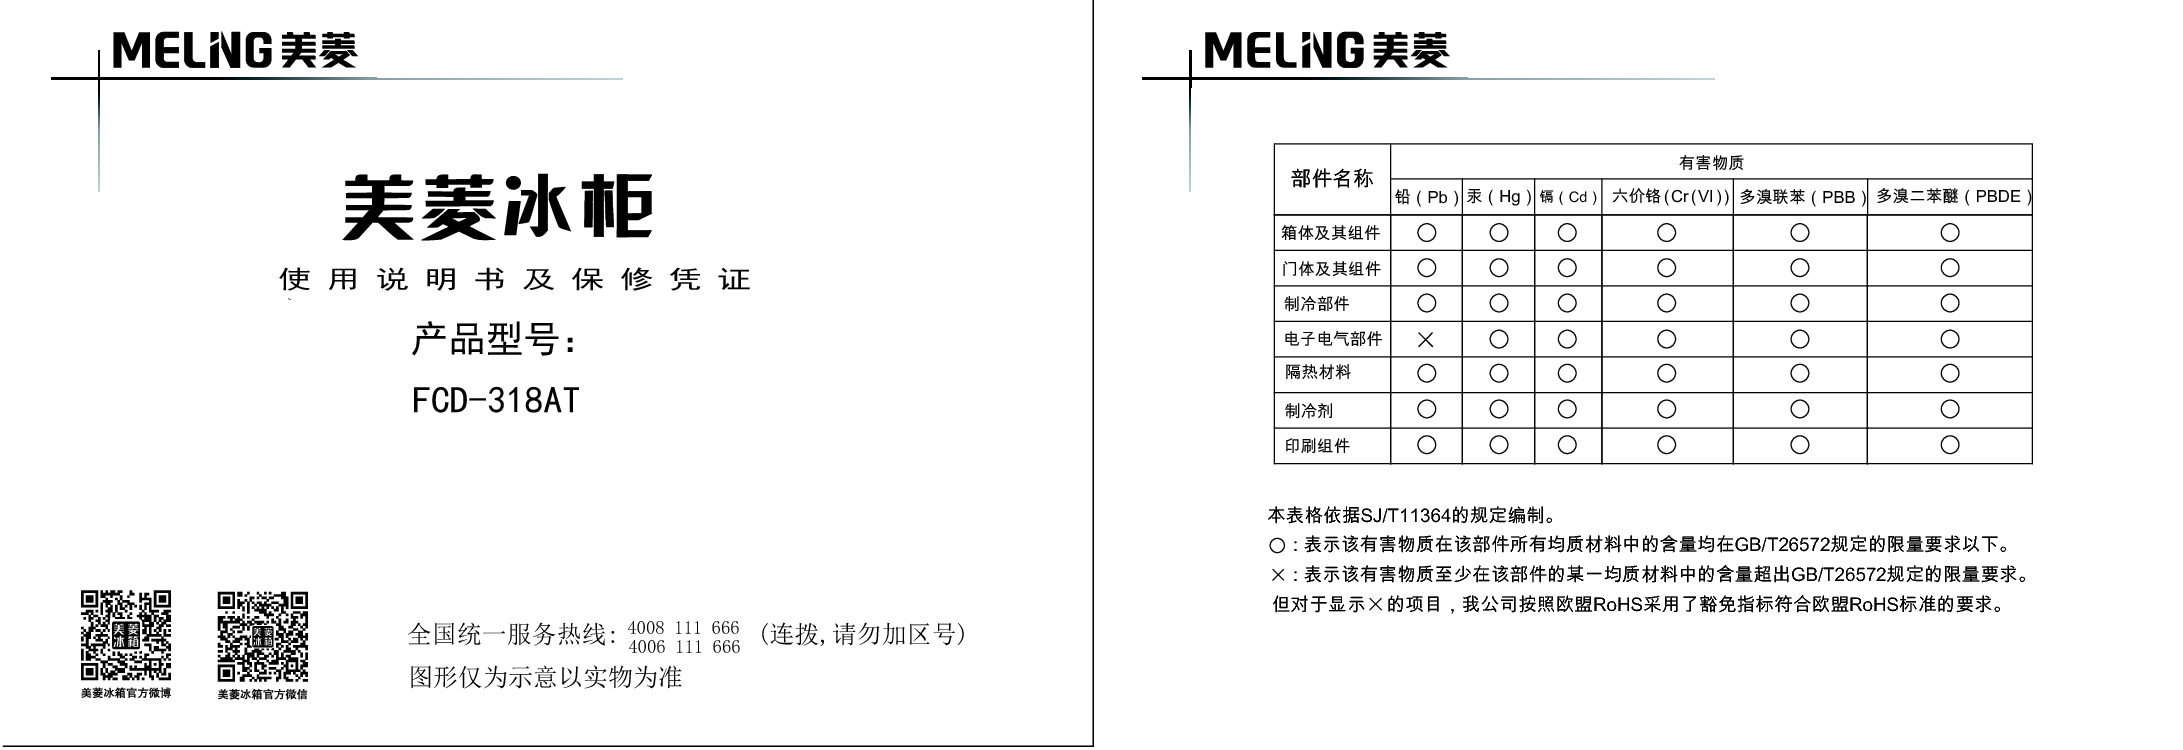 美菱 Meiling FCD-318AT 使用说明书 封面